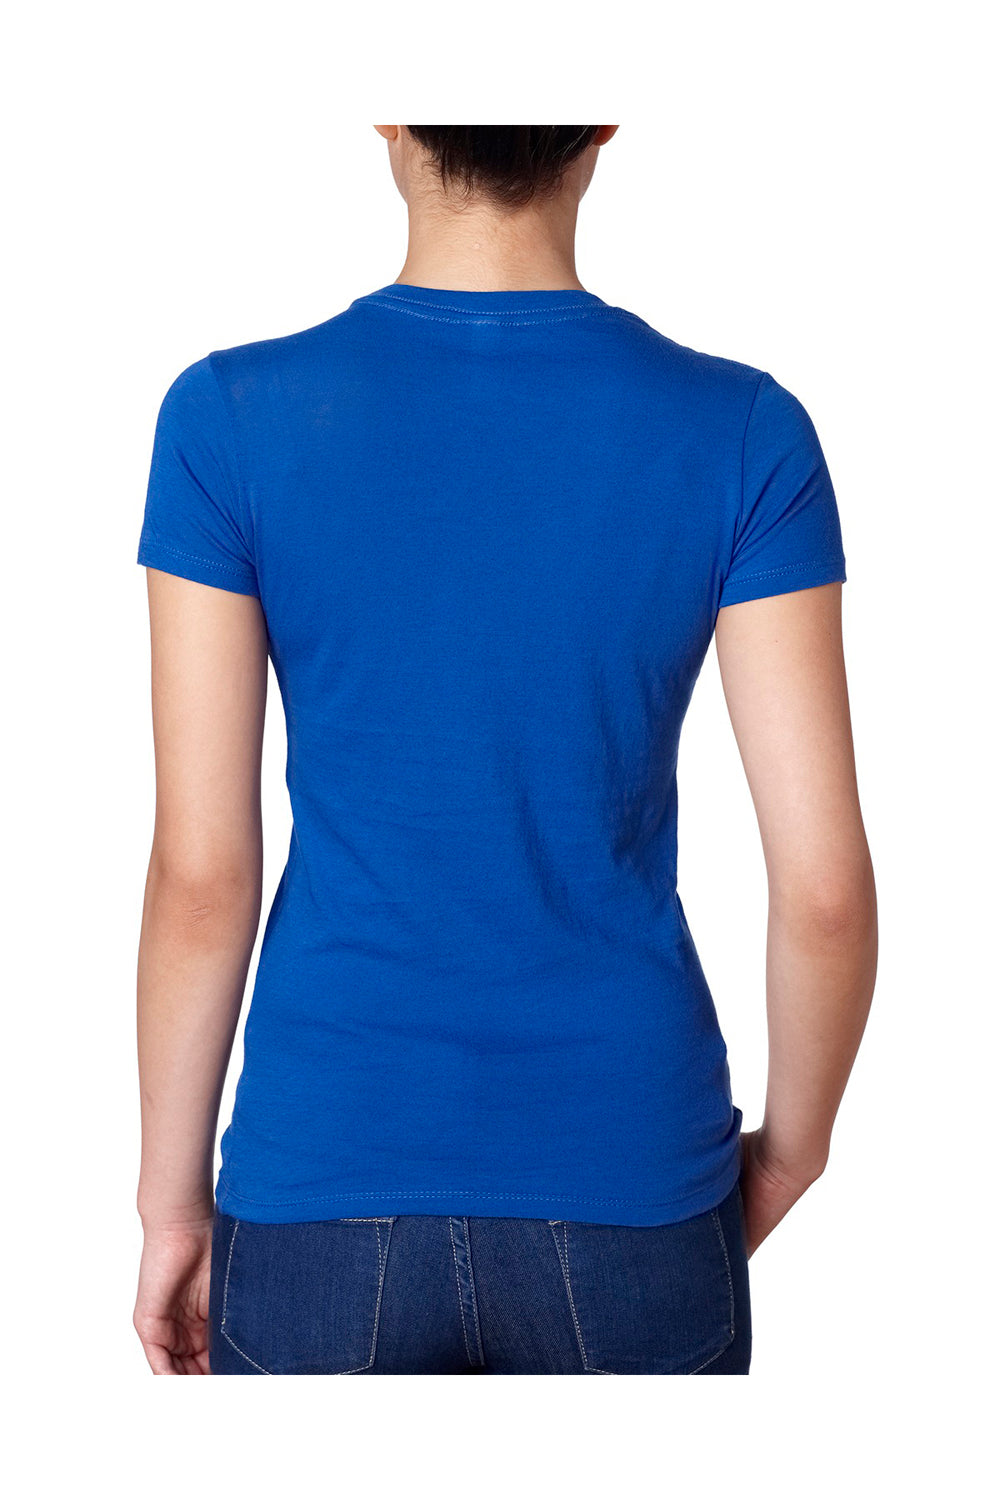 Next Level N3900 Womens Boyfriend Fine Jersey Short Sleeve Crewneck T-Shirt Royal Blue Back